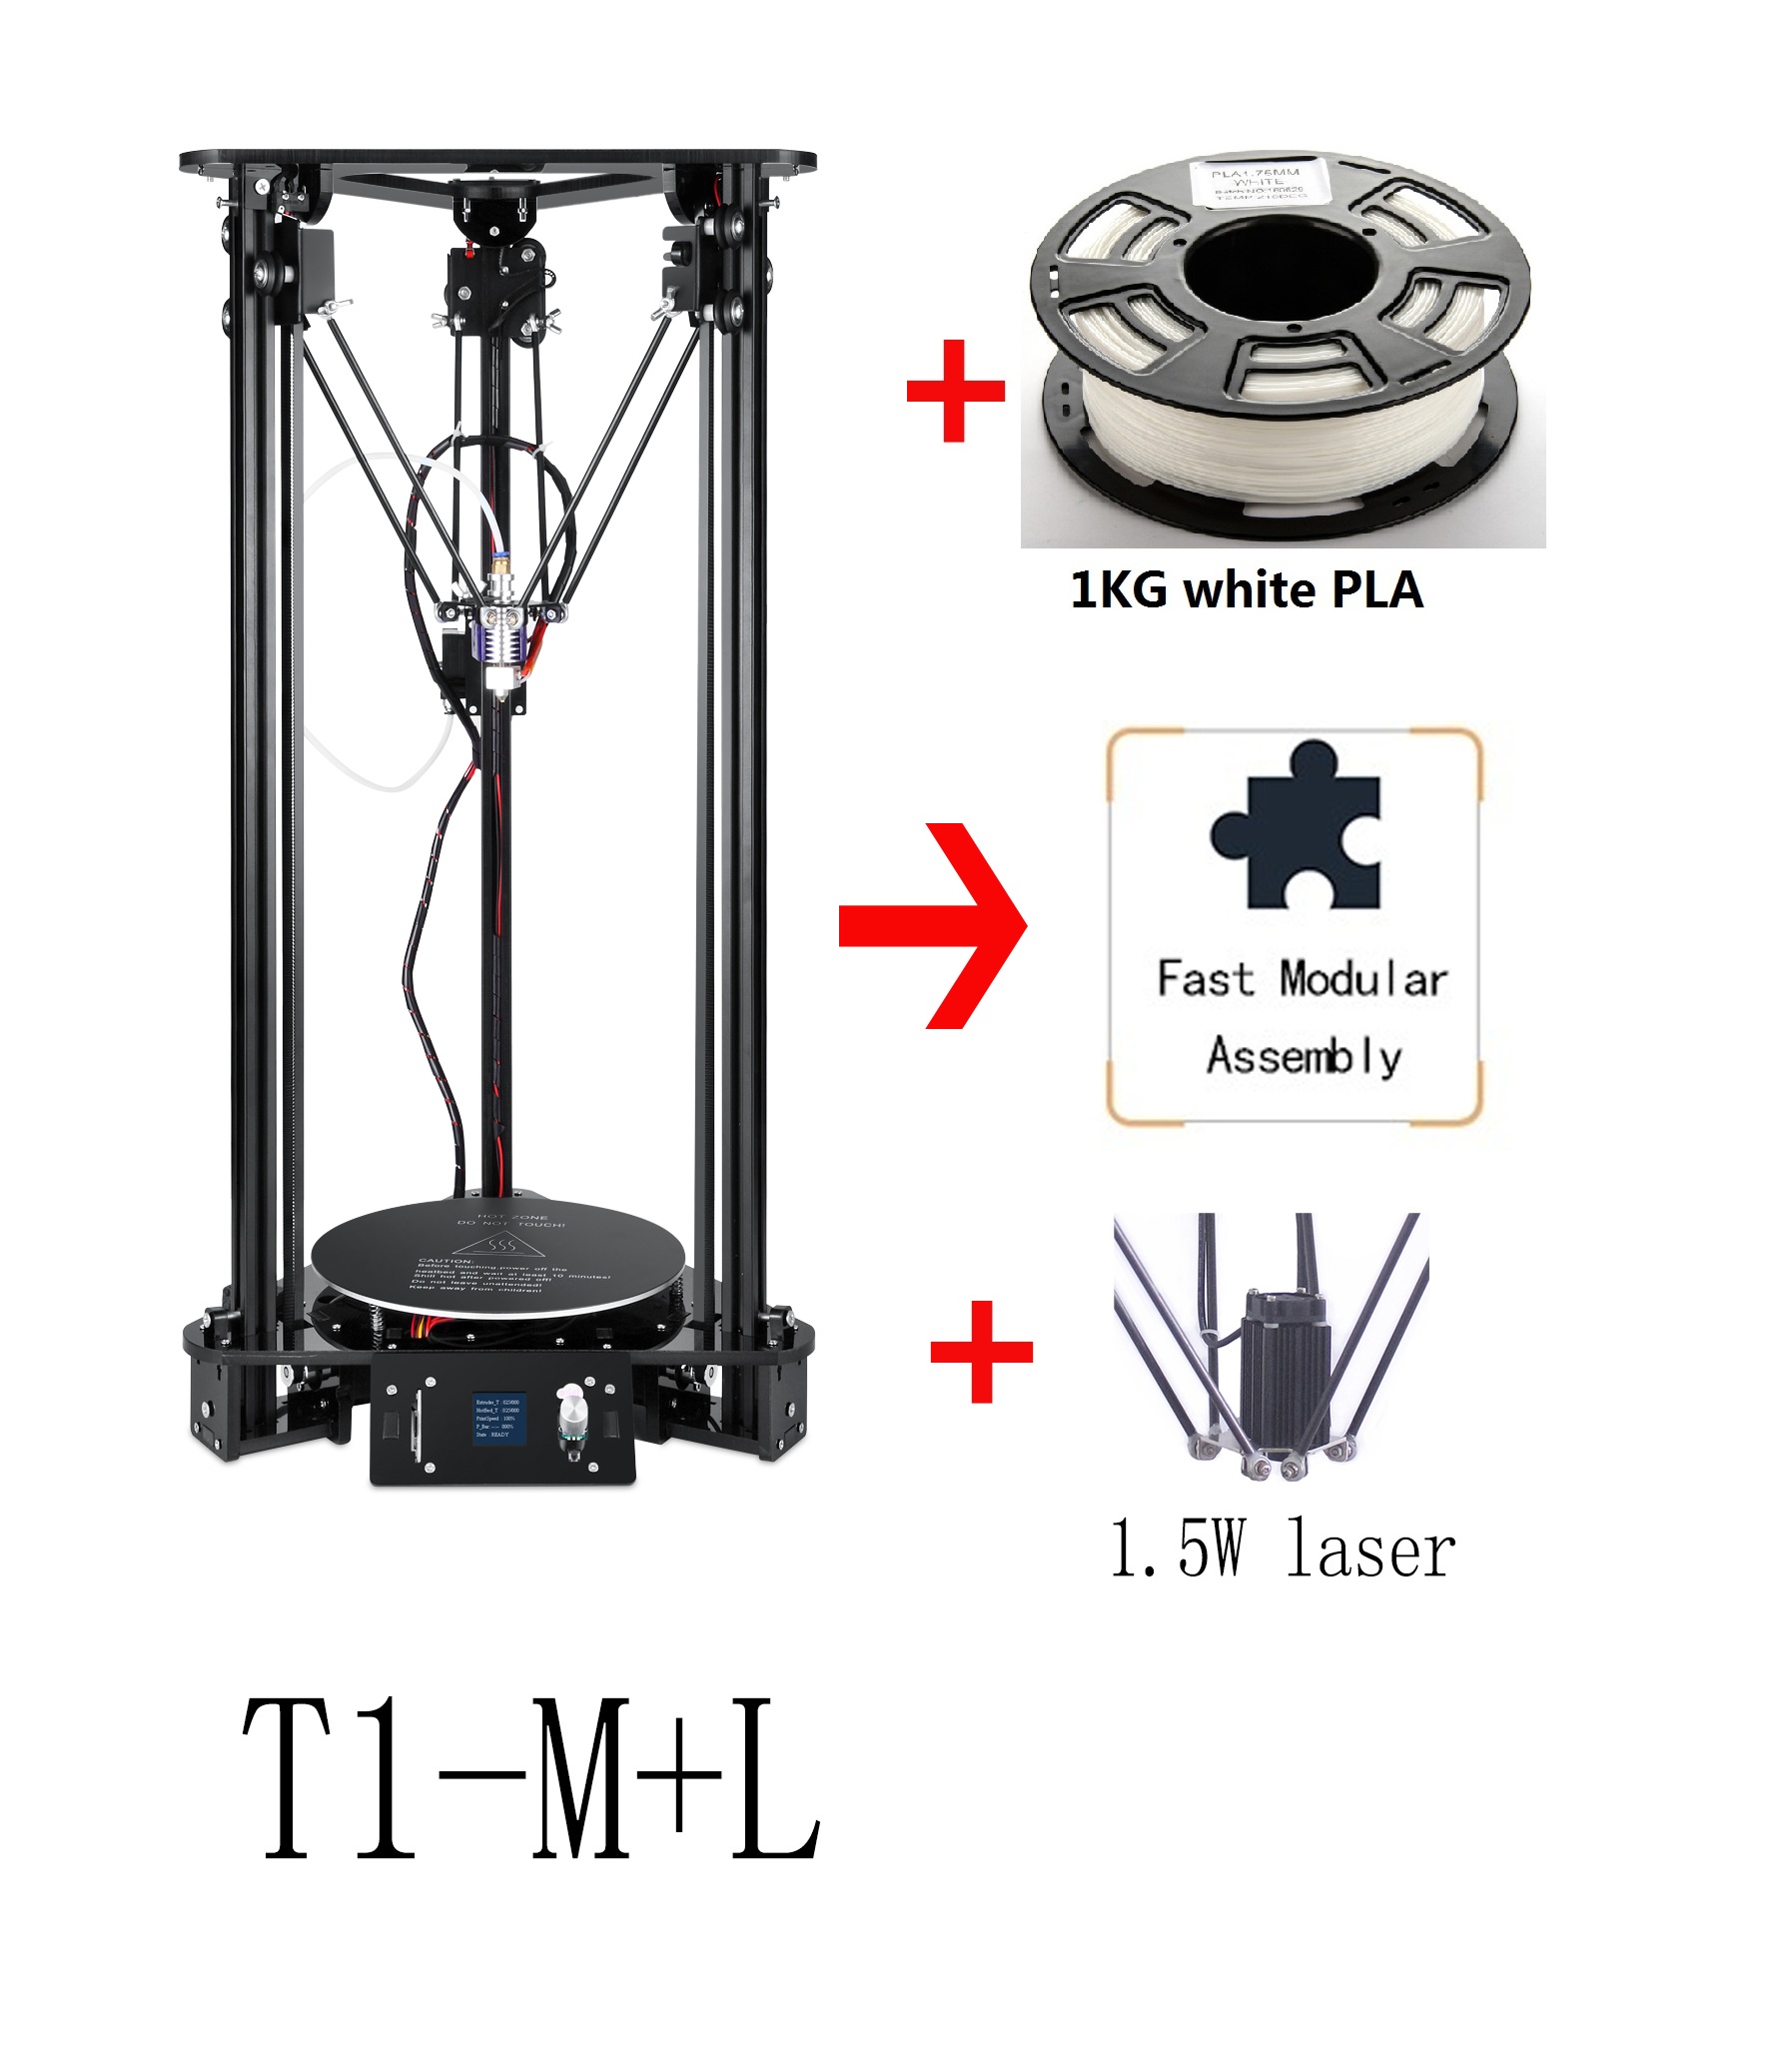 EZT® T1-M+L Delta Kossel 3D Printer DIY Kit 300*320mm Large Printer Size With Laser Engraving/1KG Filament Support Intelligent Leveing/Auto Change Fil 11